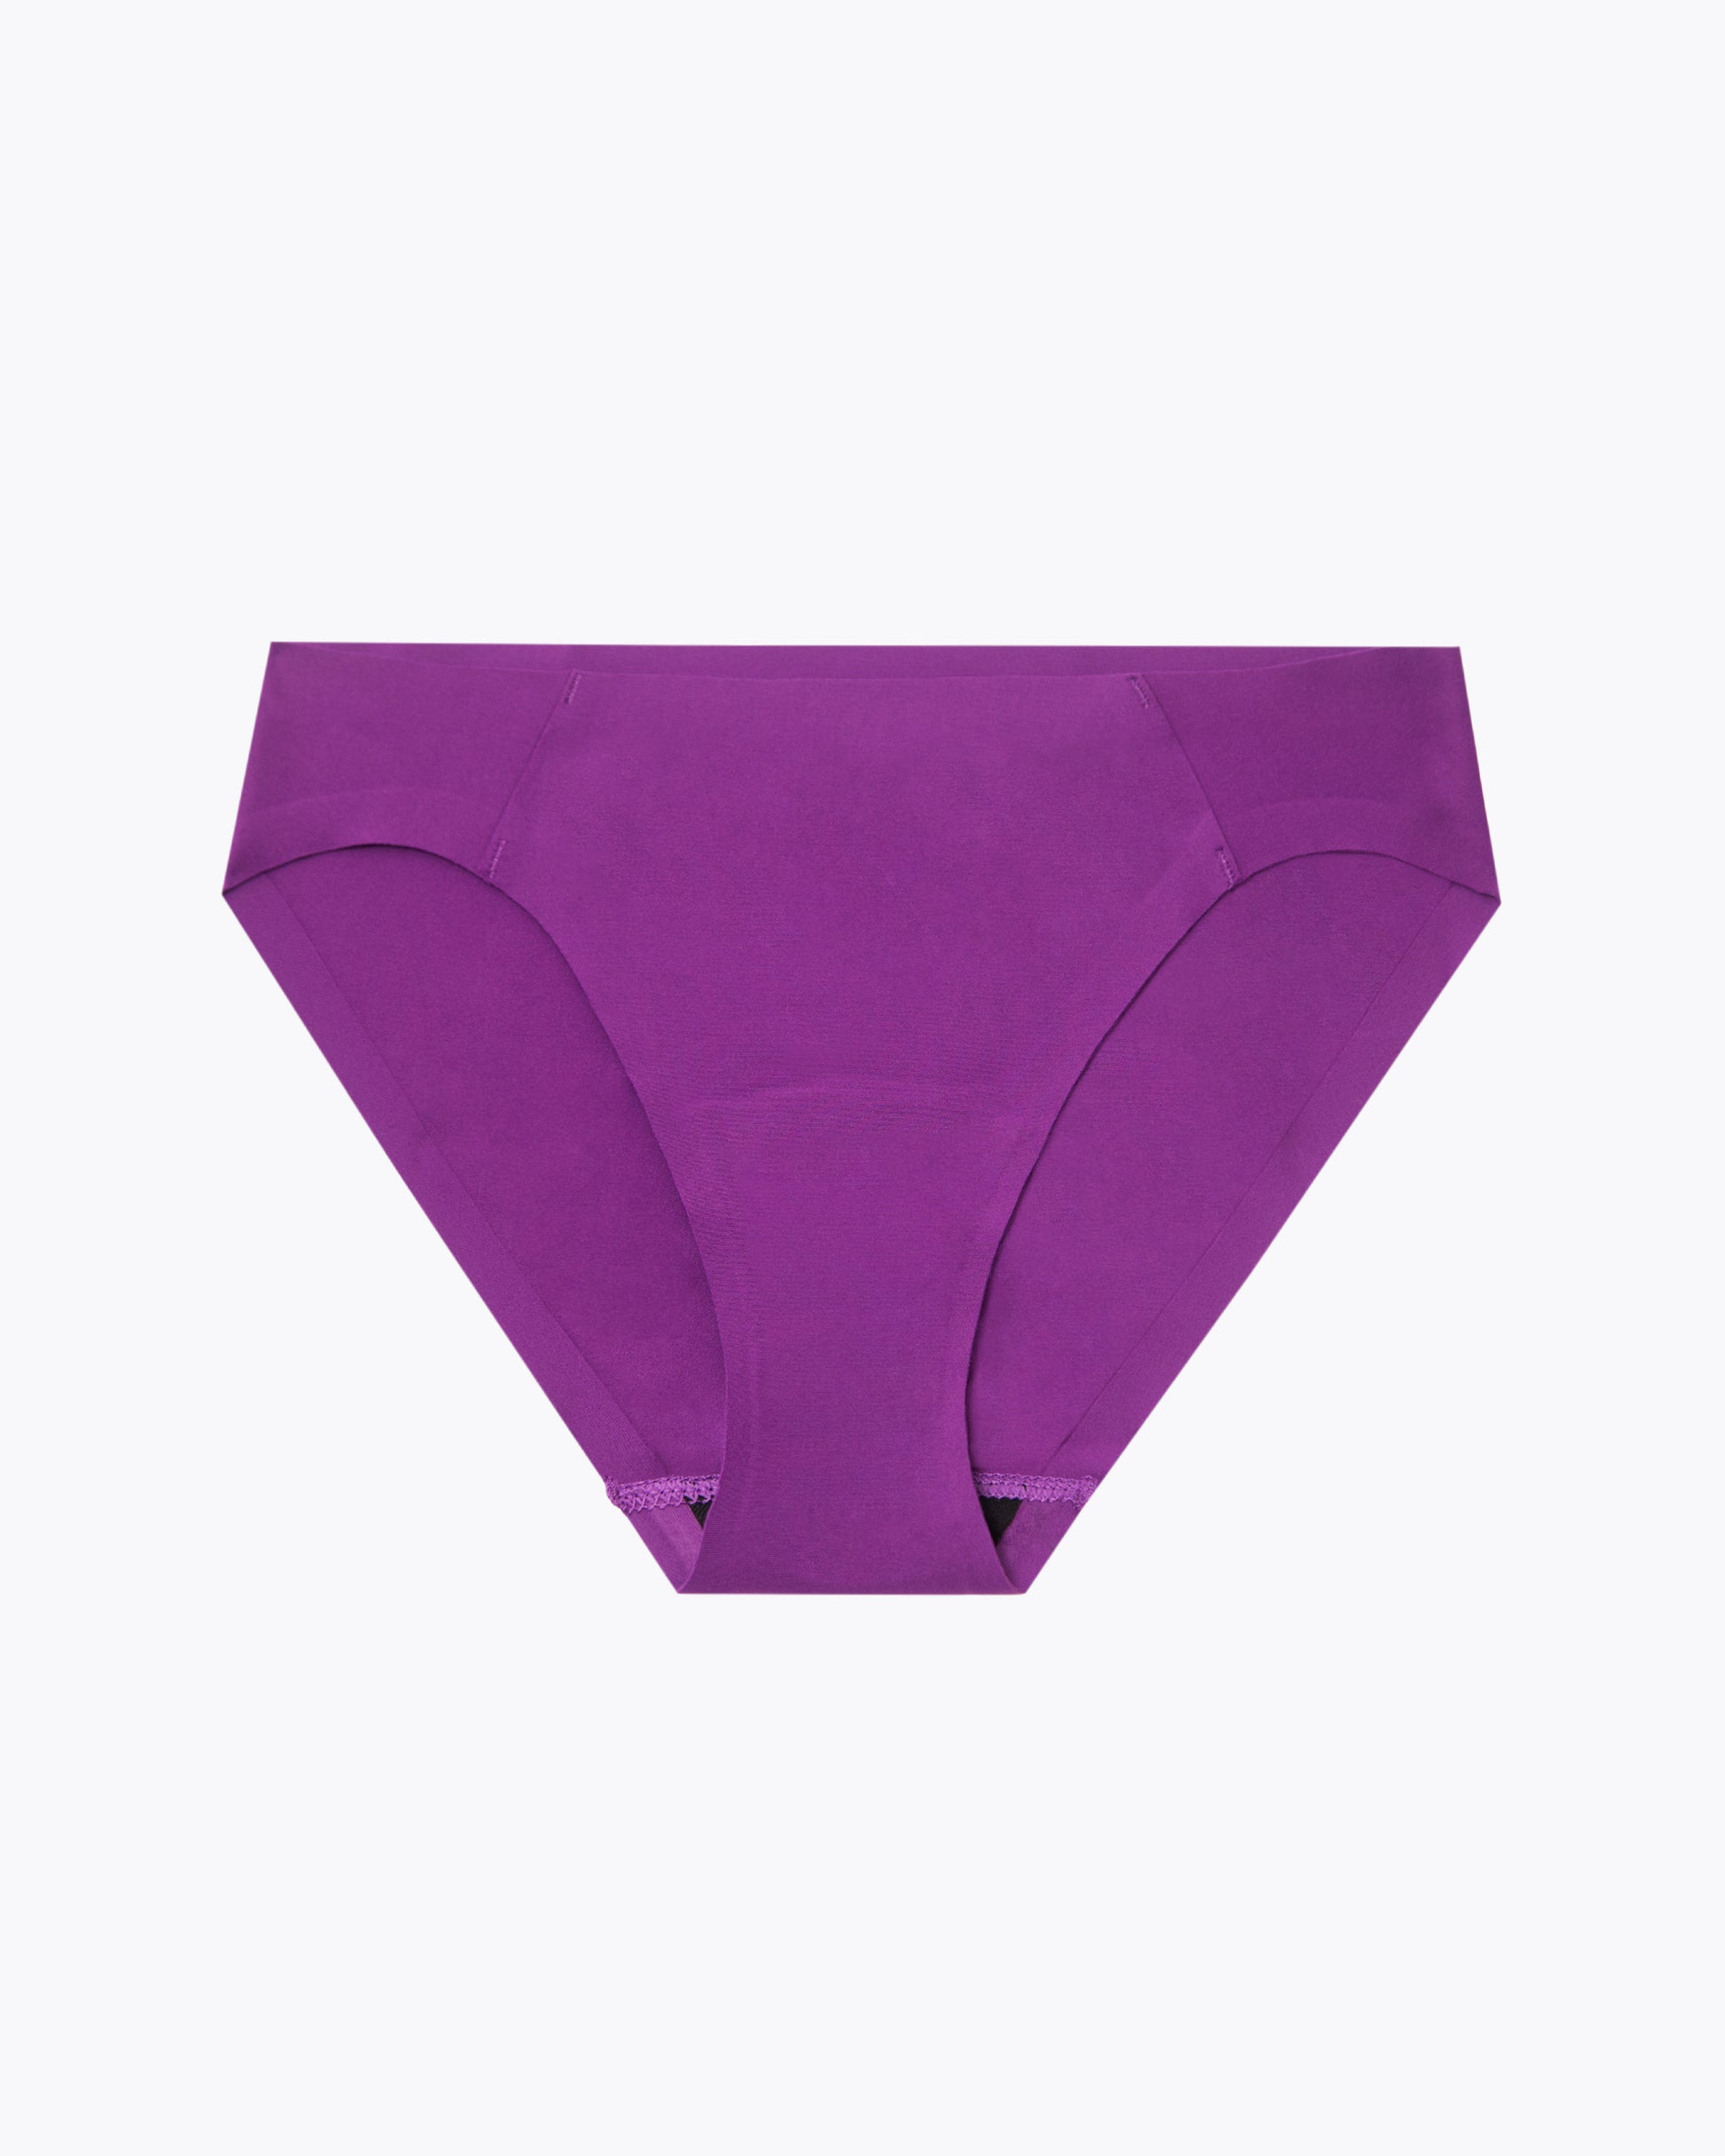 Bikini Menstrual Panties Woman Cotton Menstruaion Underwear Very